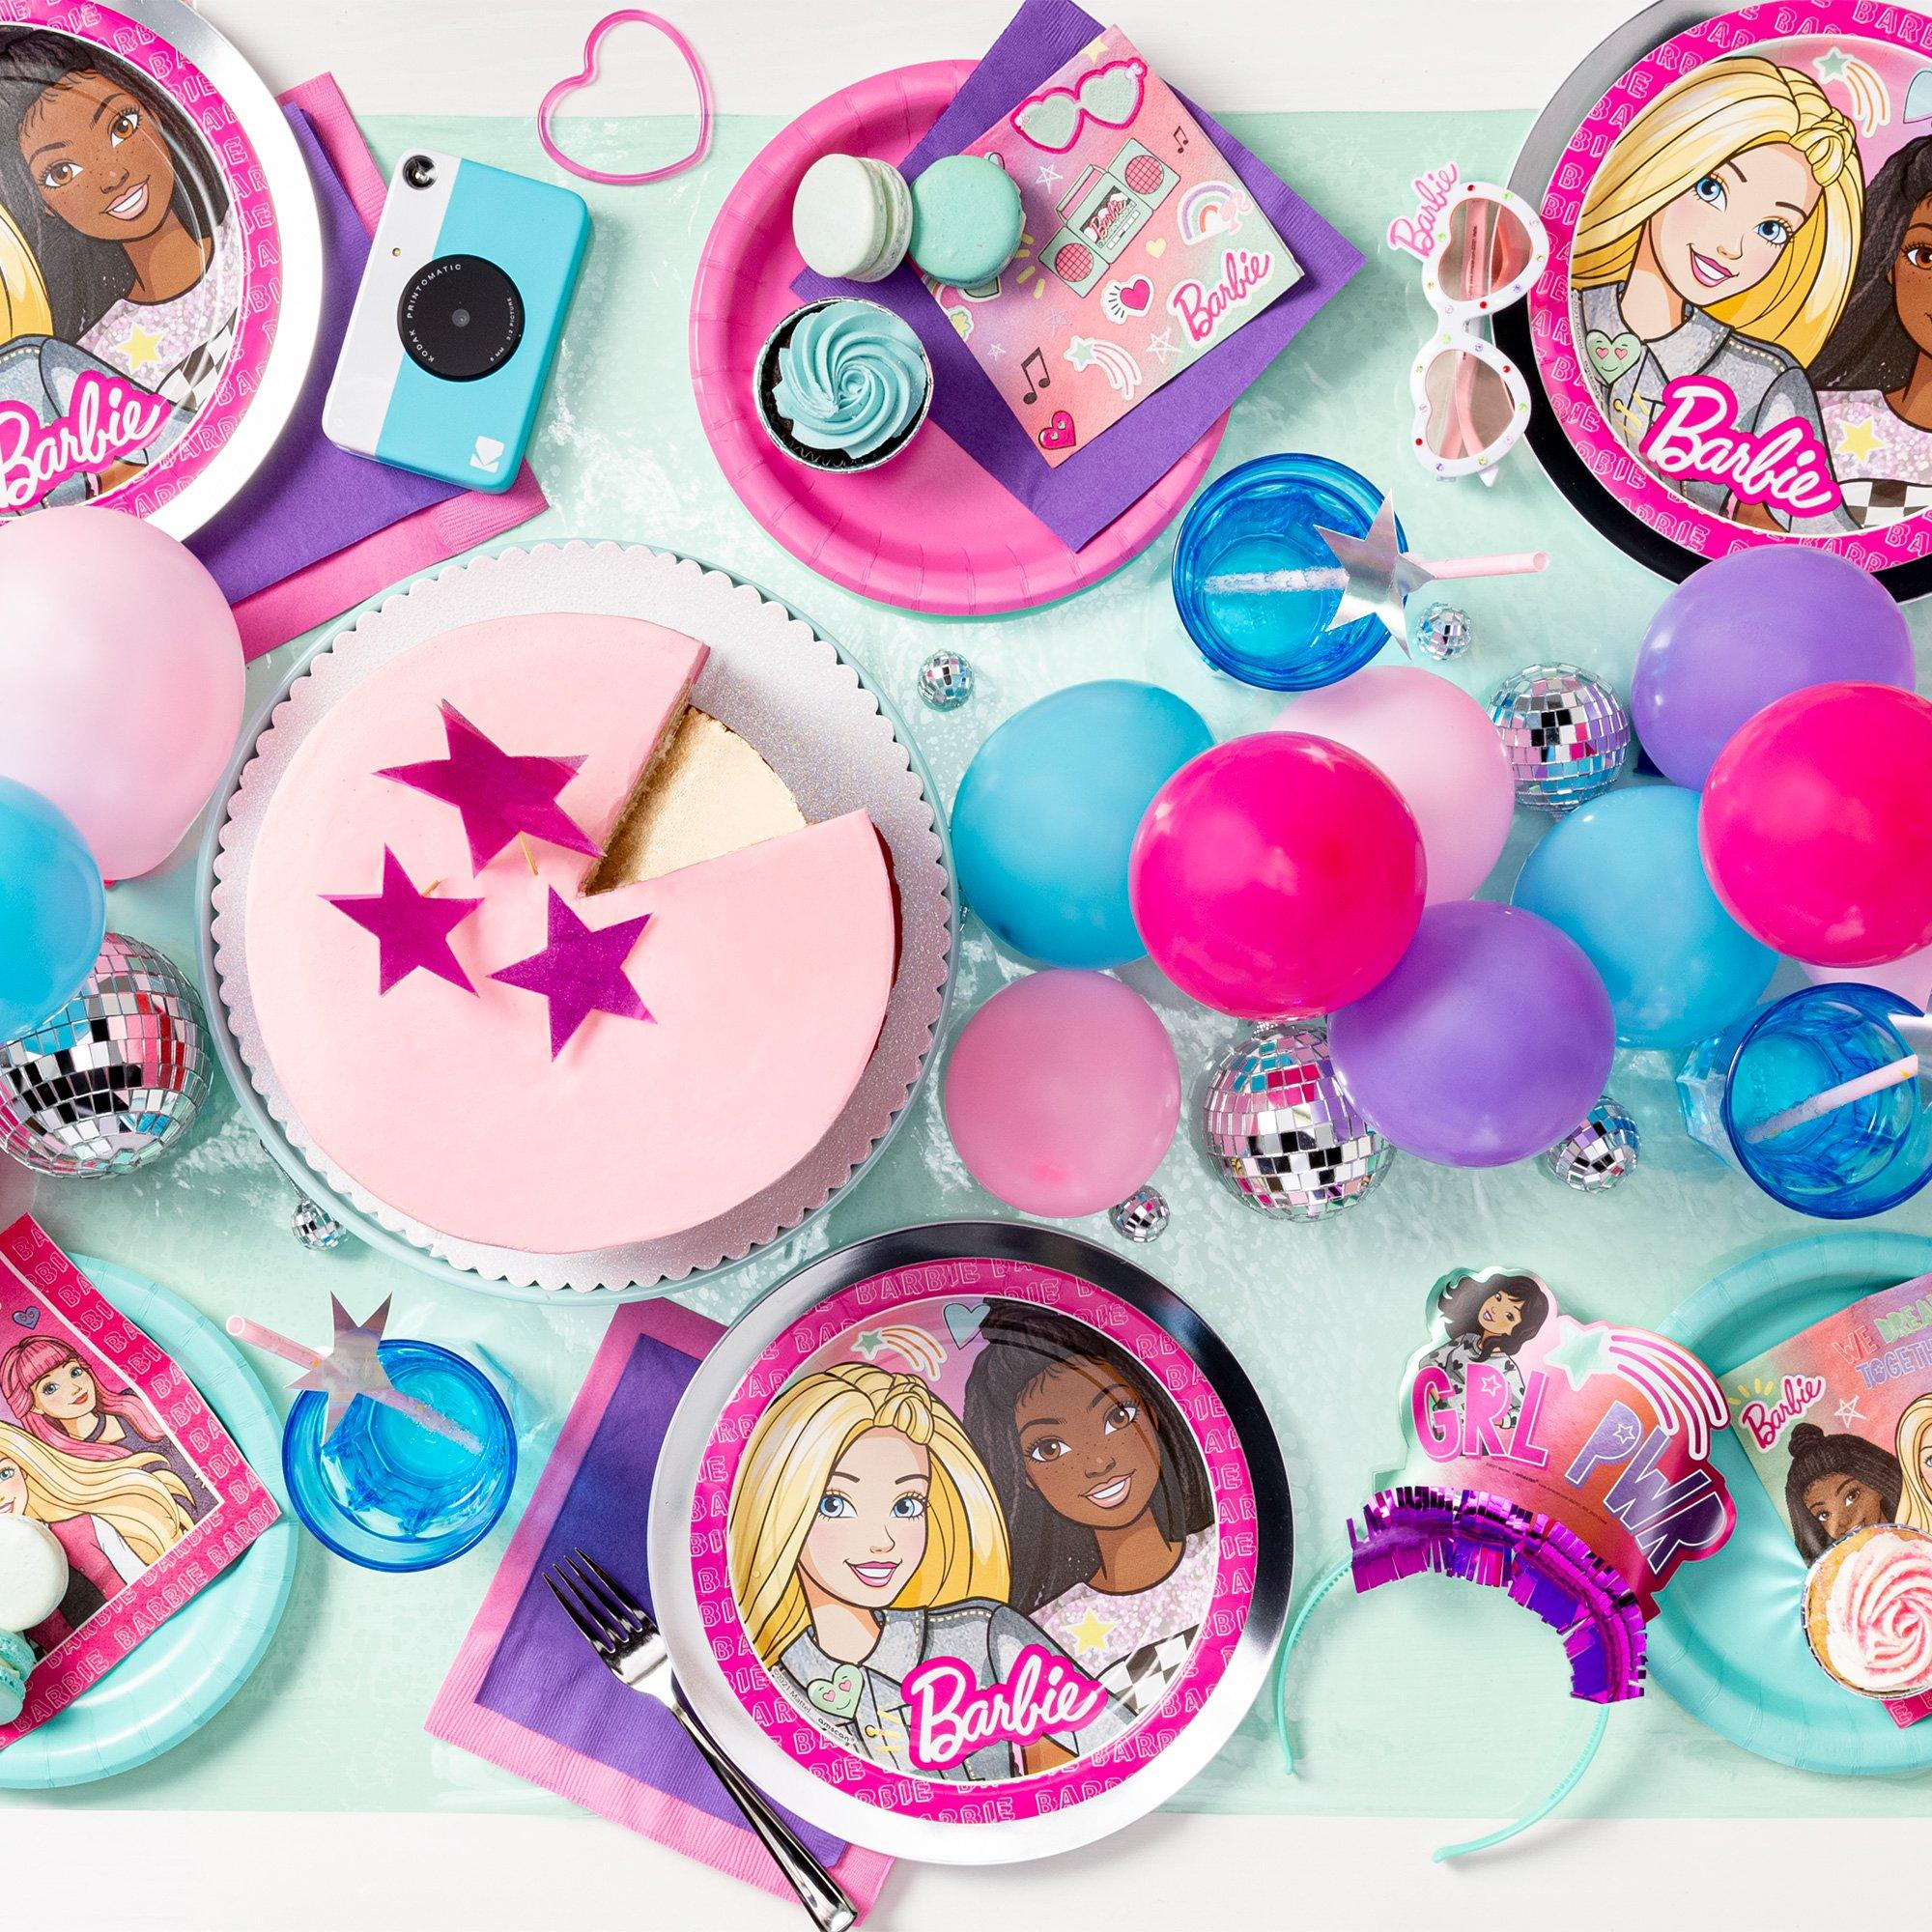 Barbie Dream Birthday Party